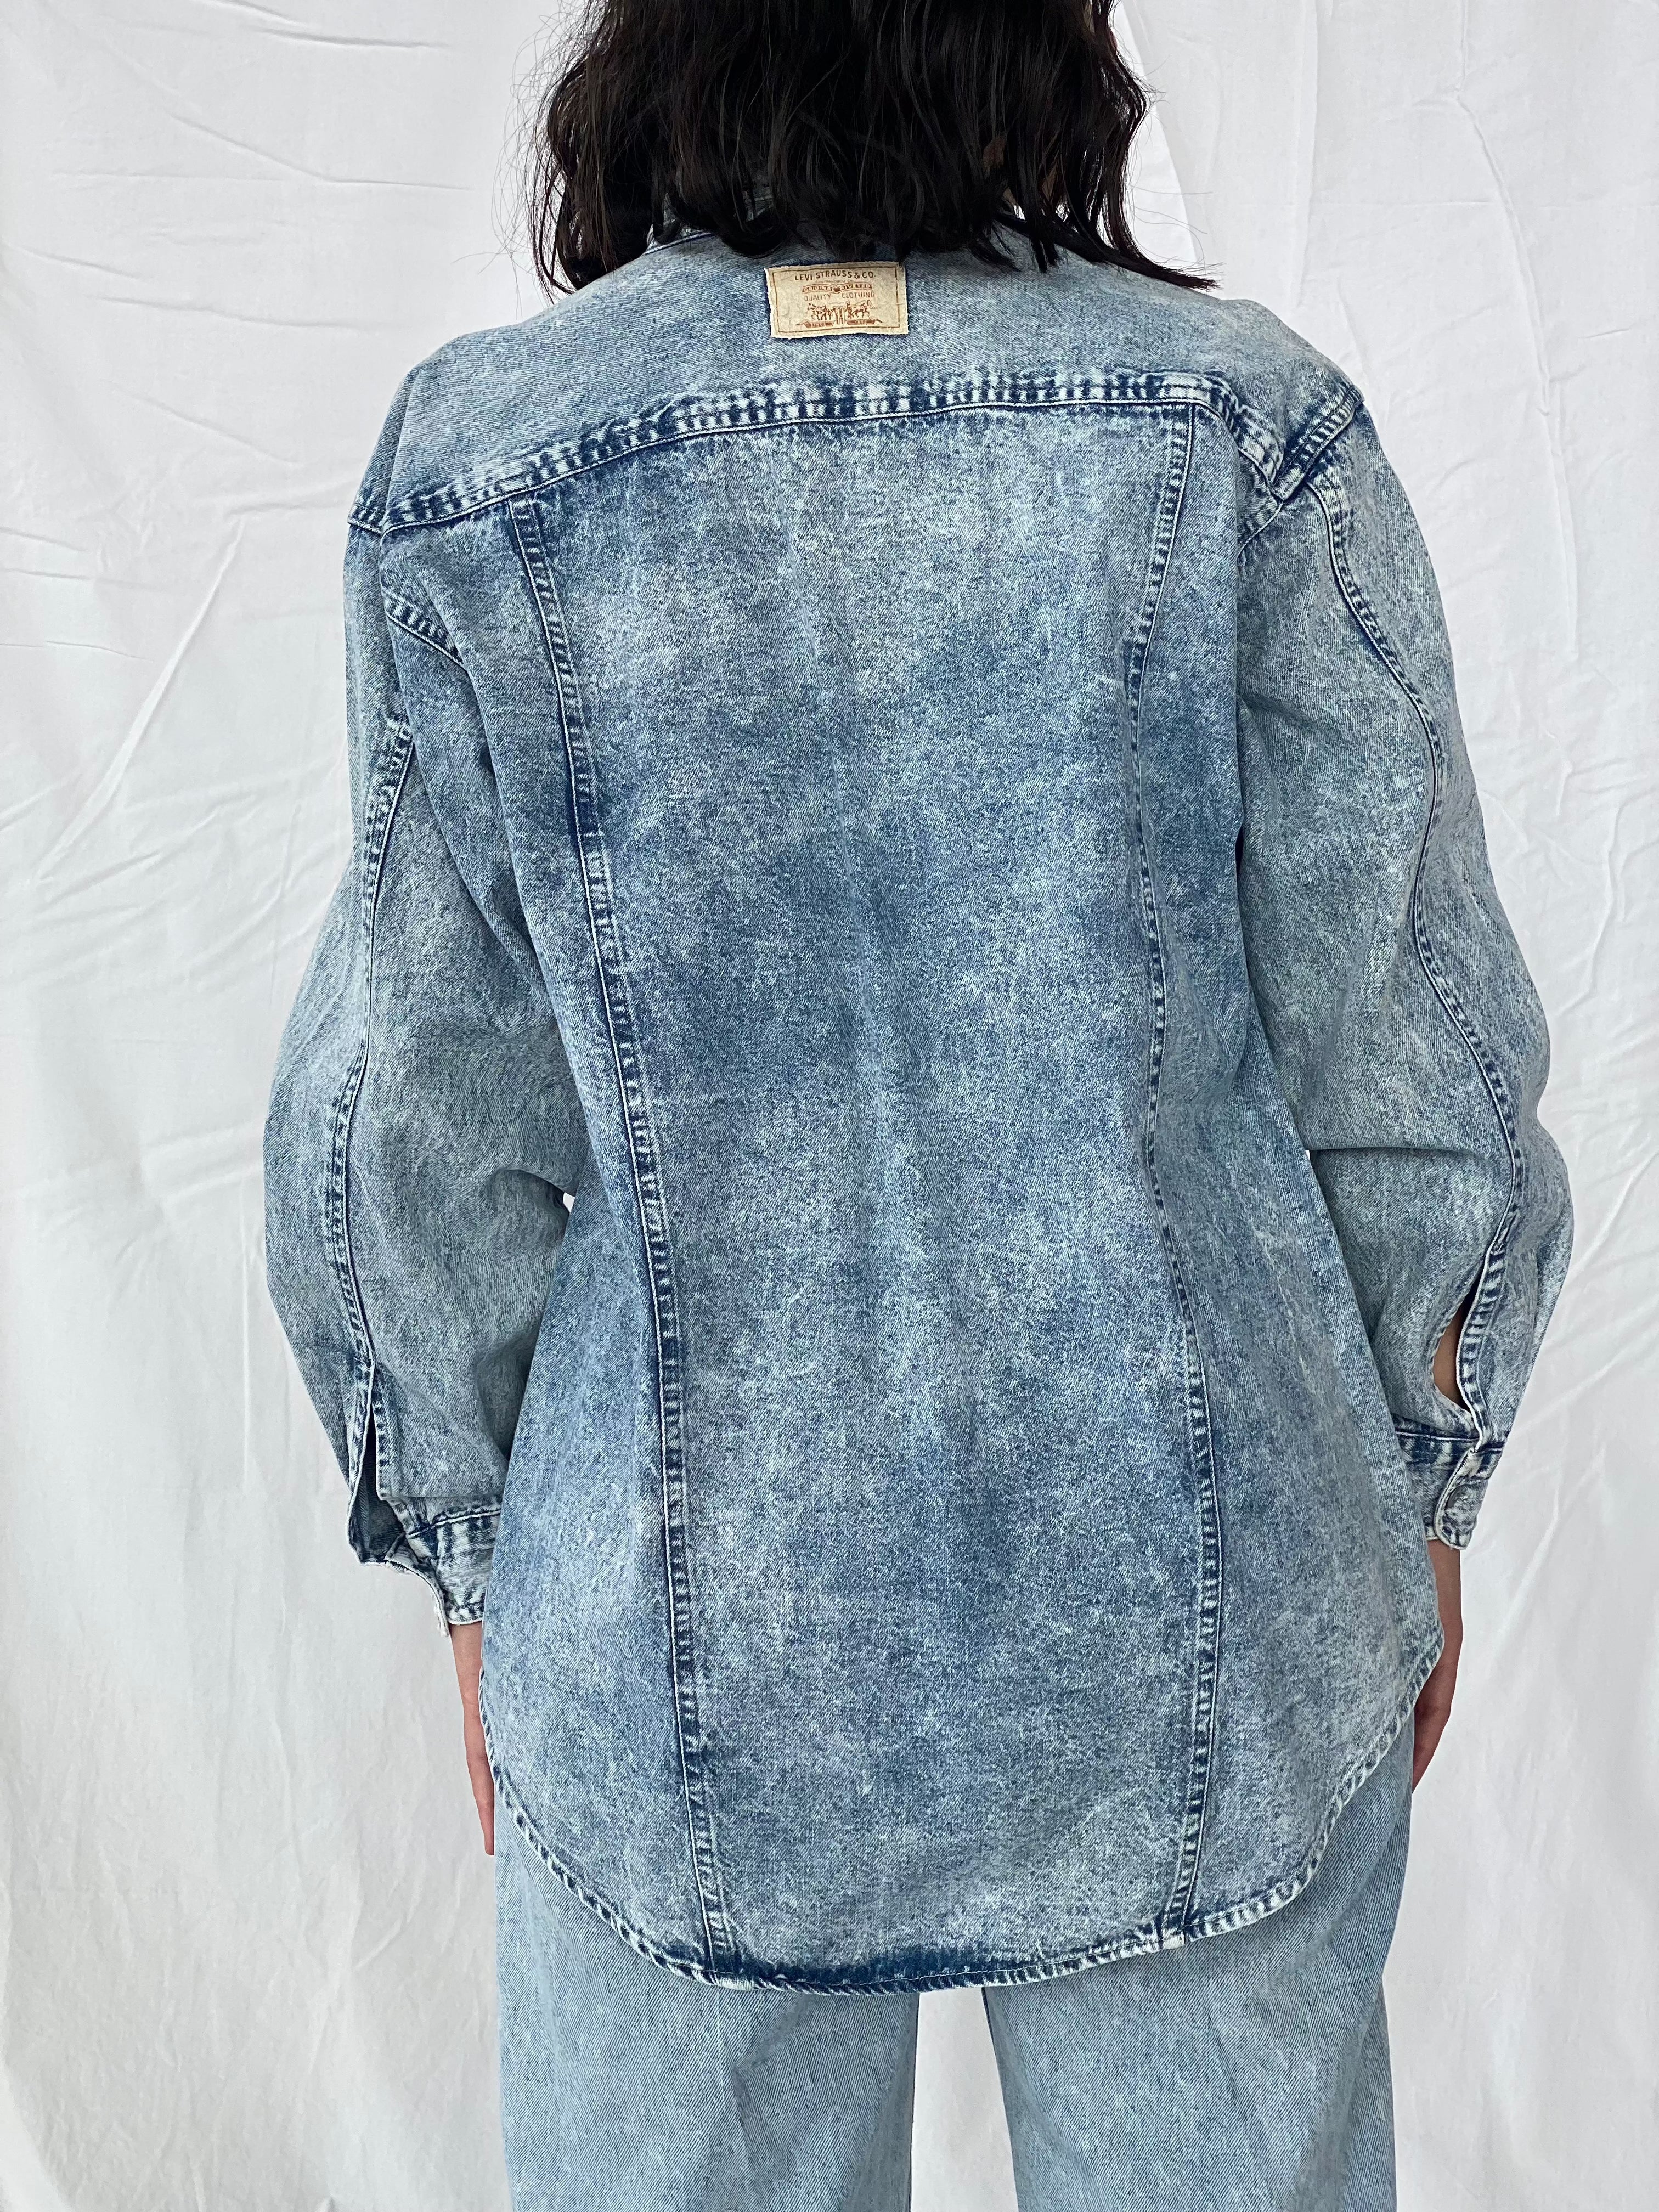 Levi’s Denim Shirt - Balagan Vintage Full Sleeve Shirt 90s, full sleeve shirt, levis, levis jeans, outerwear, oversized shirt, vintage